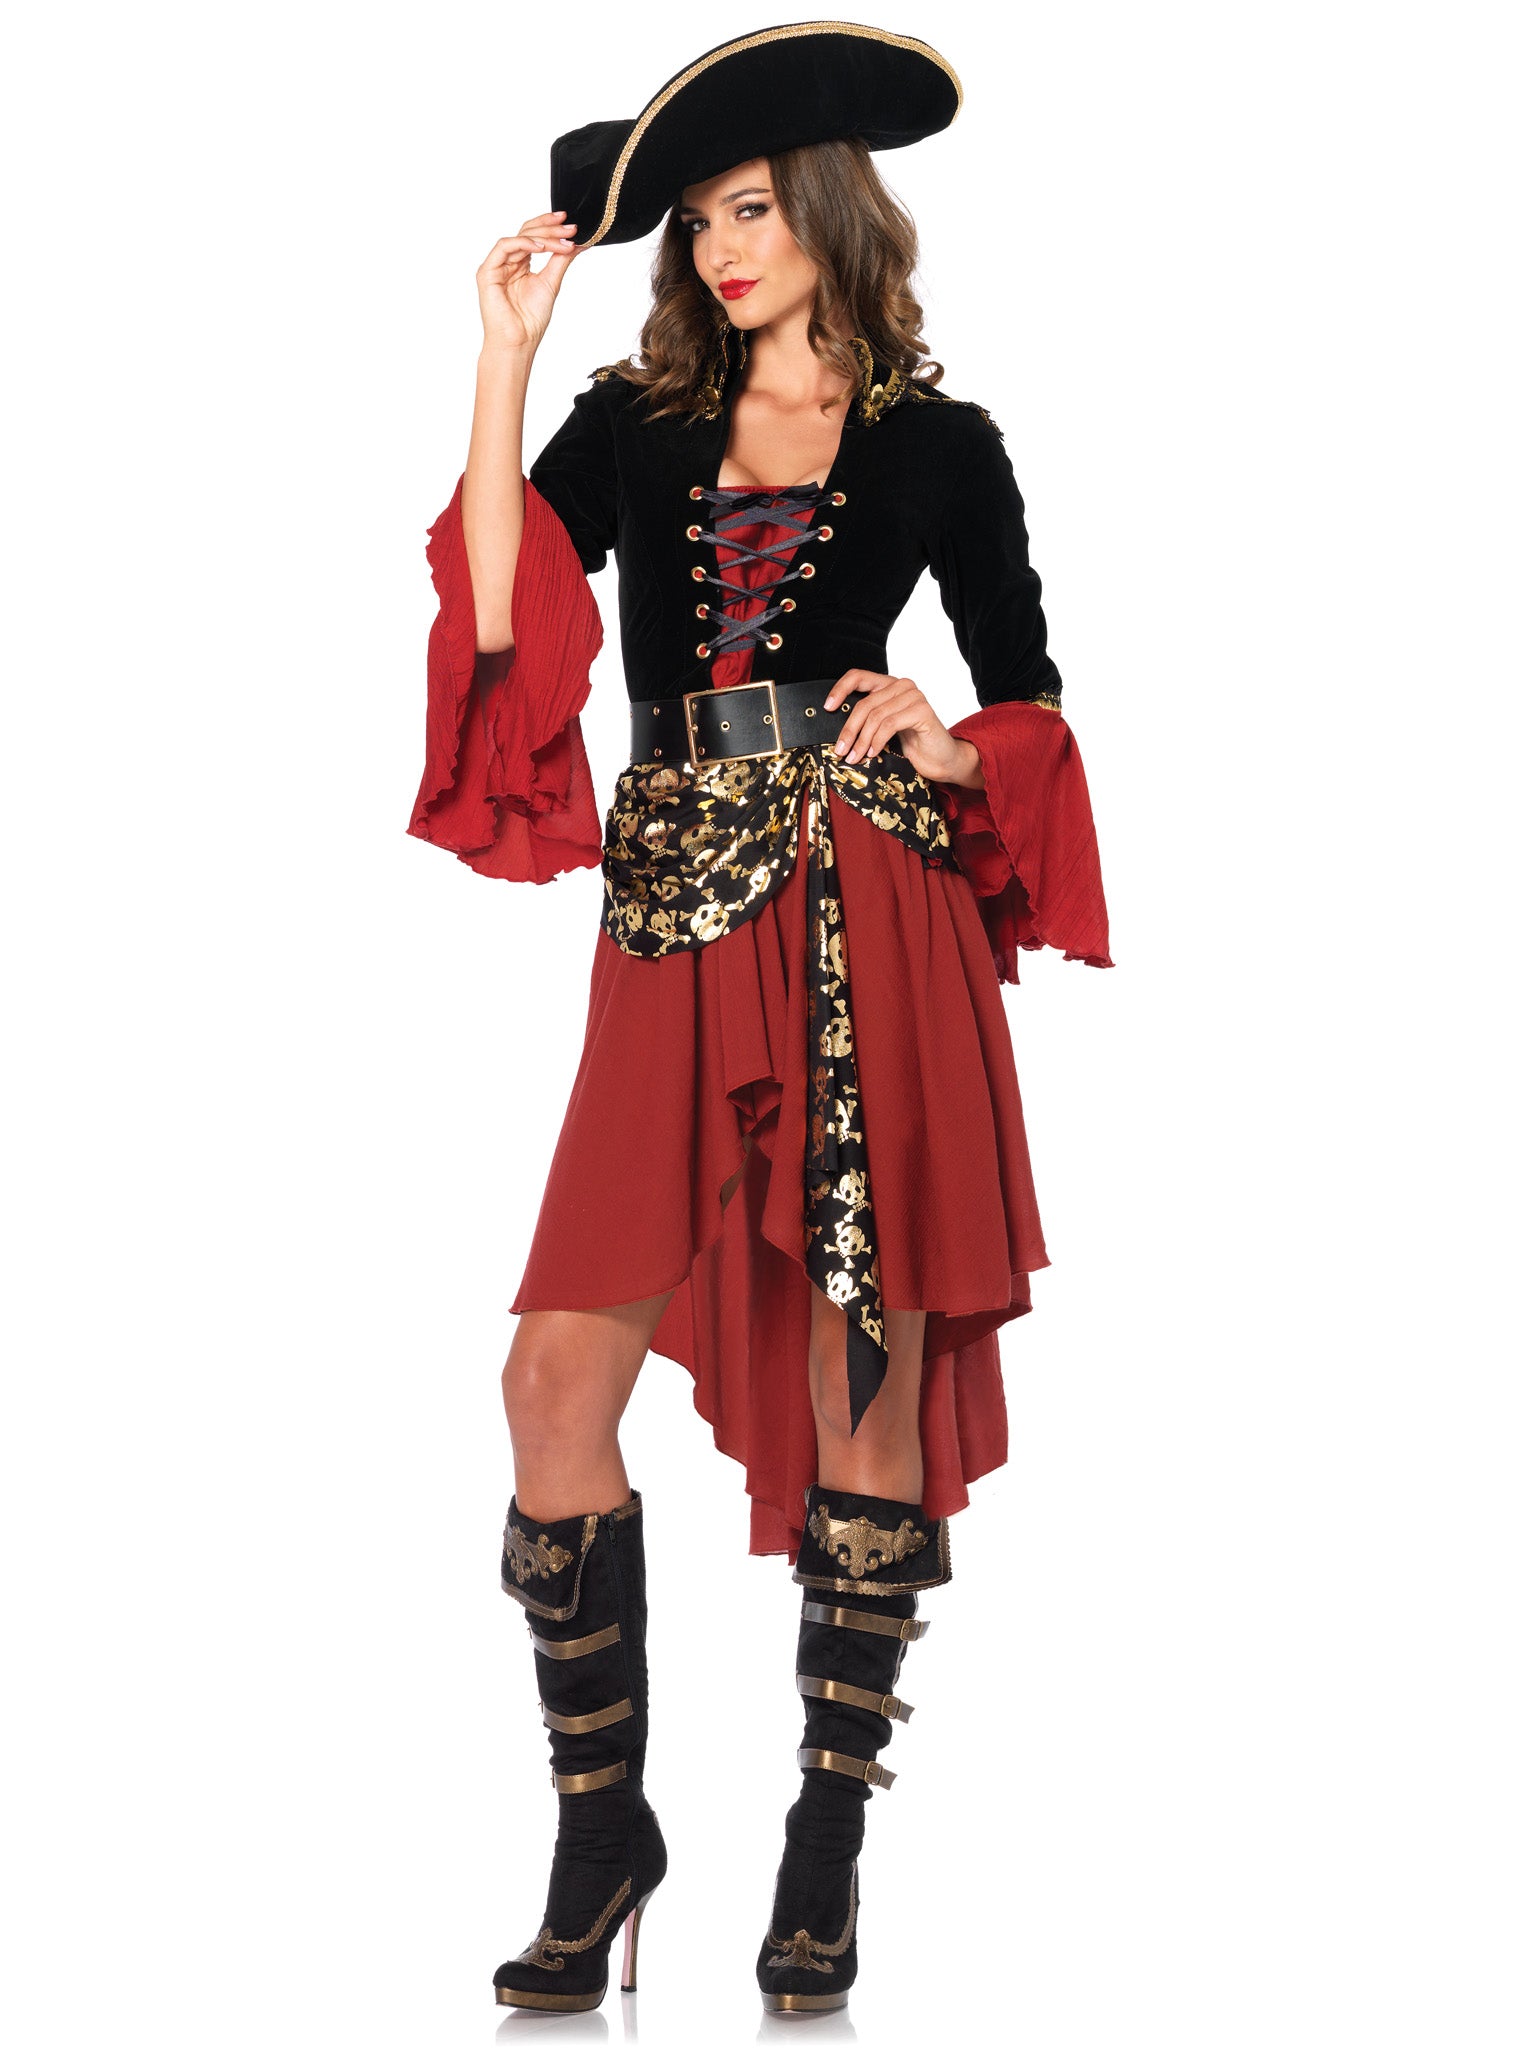 Pirates of the Caribbean Costume Accessory Set - Bulk Pack